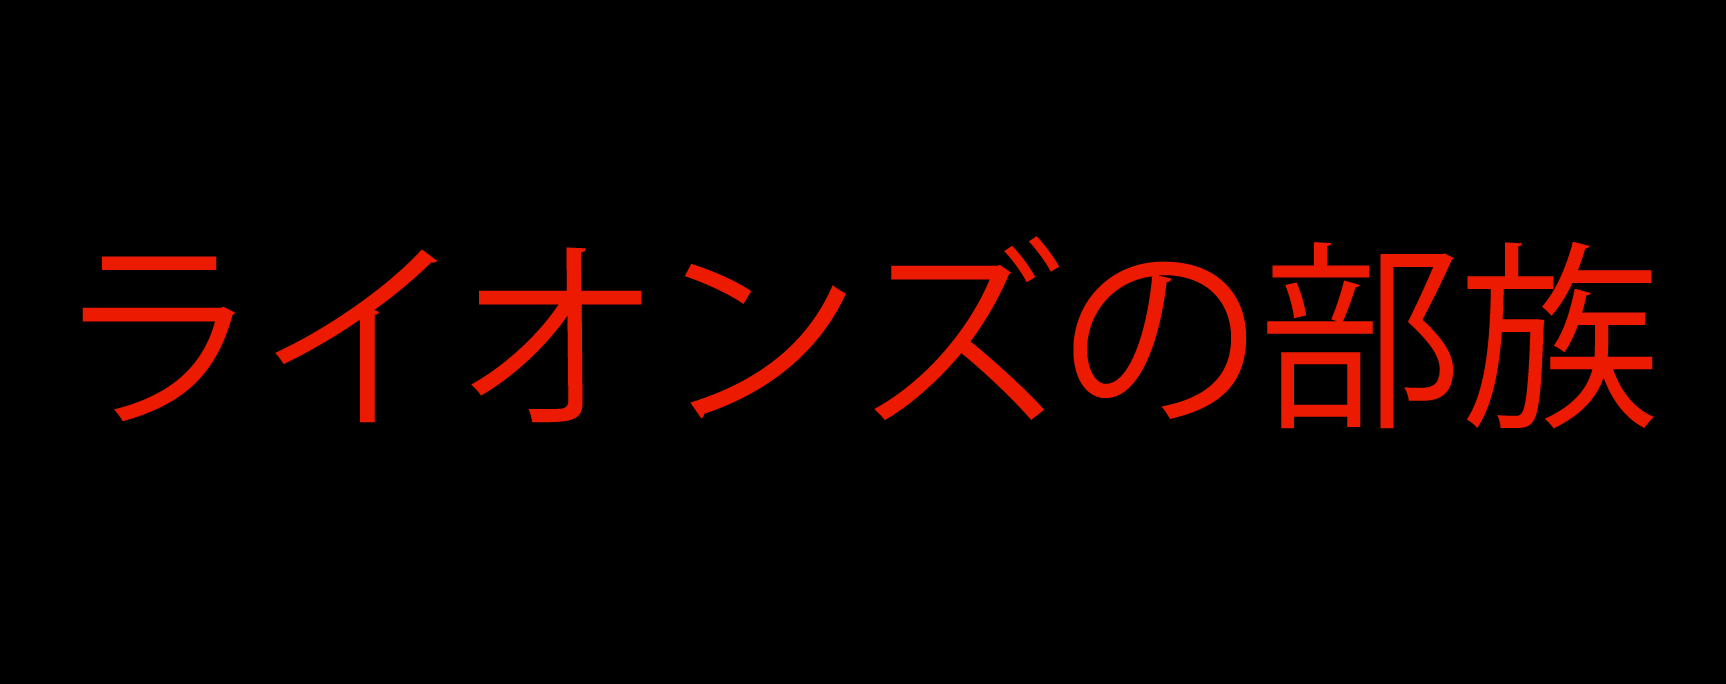 Black Japanese Logo - Tribes of Lions Logo (Japanese Black Background) by ...